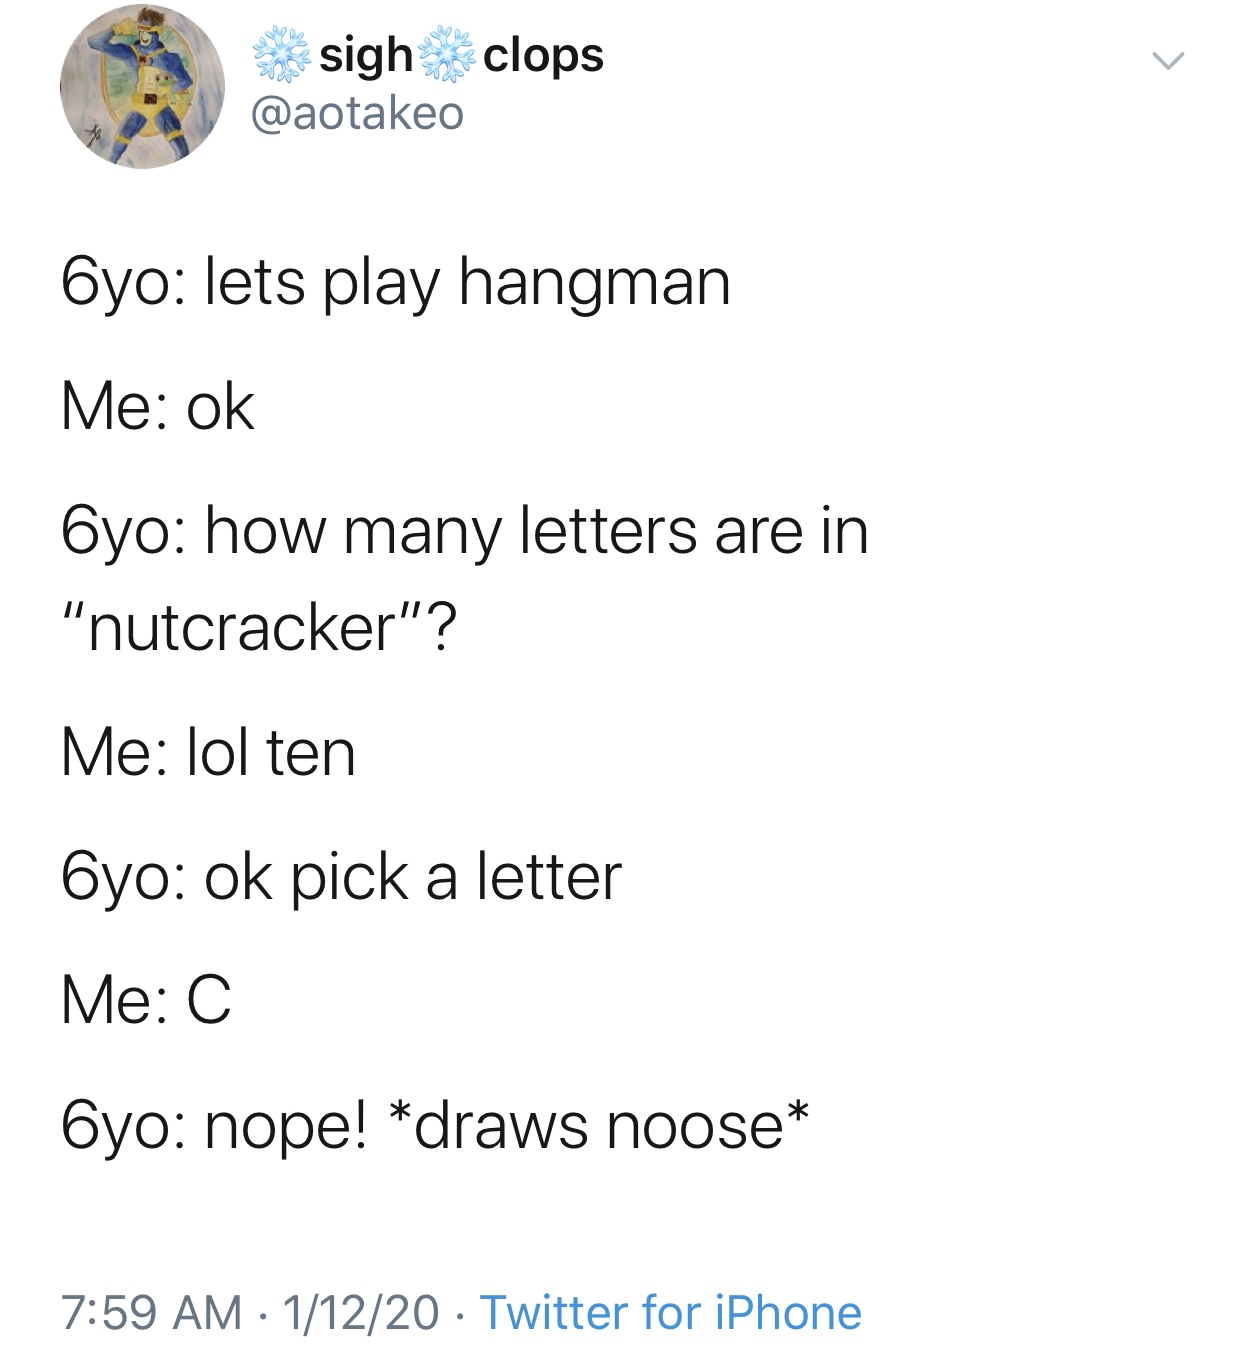 angle - sigh clops 6yo lets play hangman Me ok 6yo how many letters are in "nutcracker"? Me lol ten 6yo ok pick a letter Me C Oyo nope! draws noose 11220 Twitter for iPhone